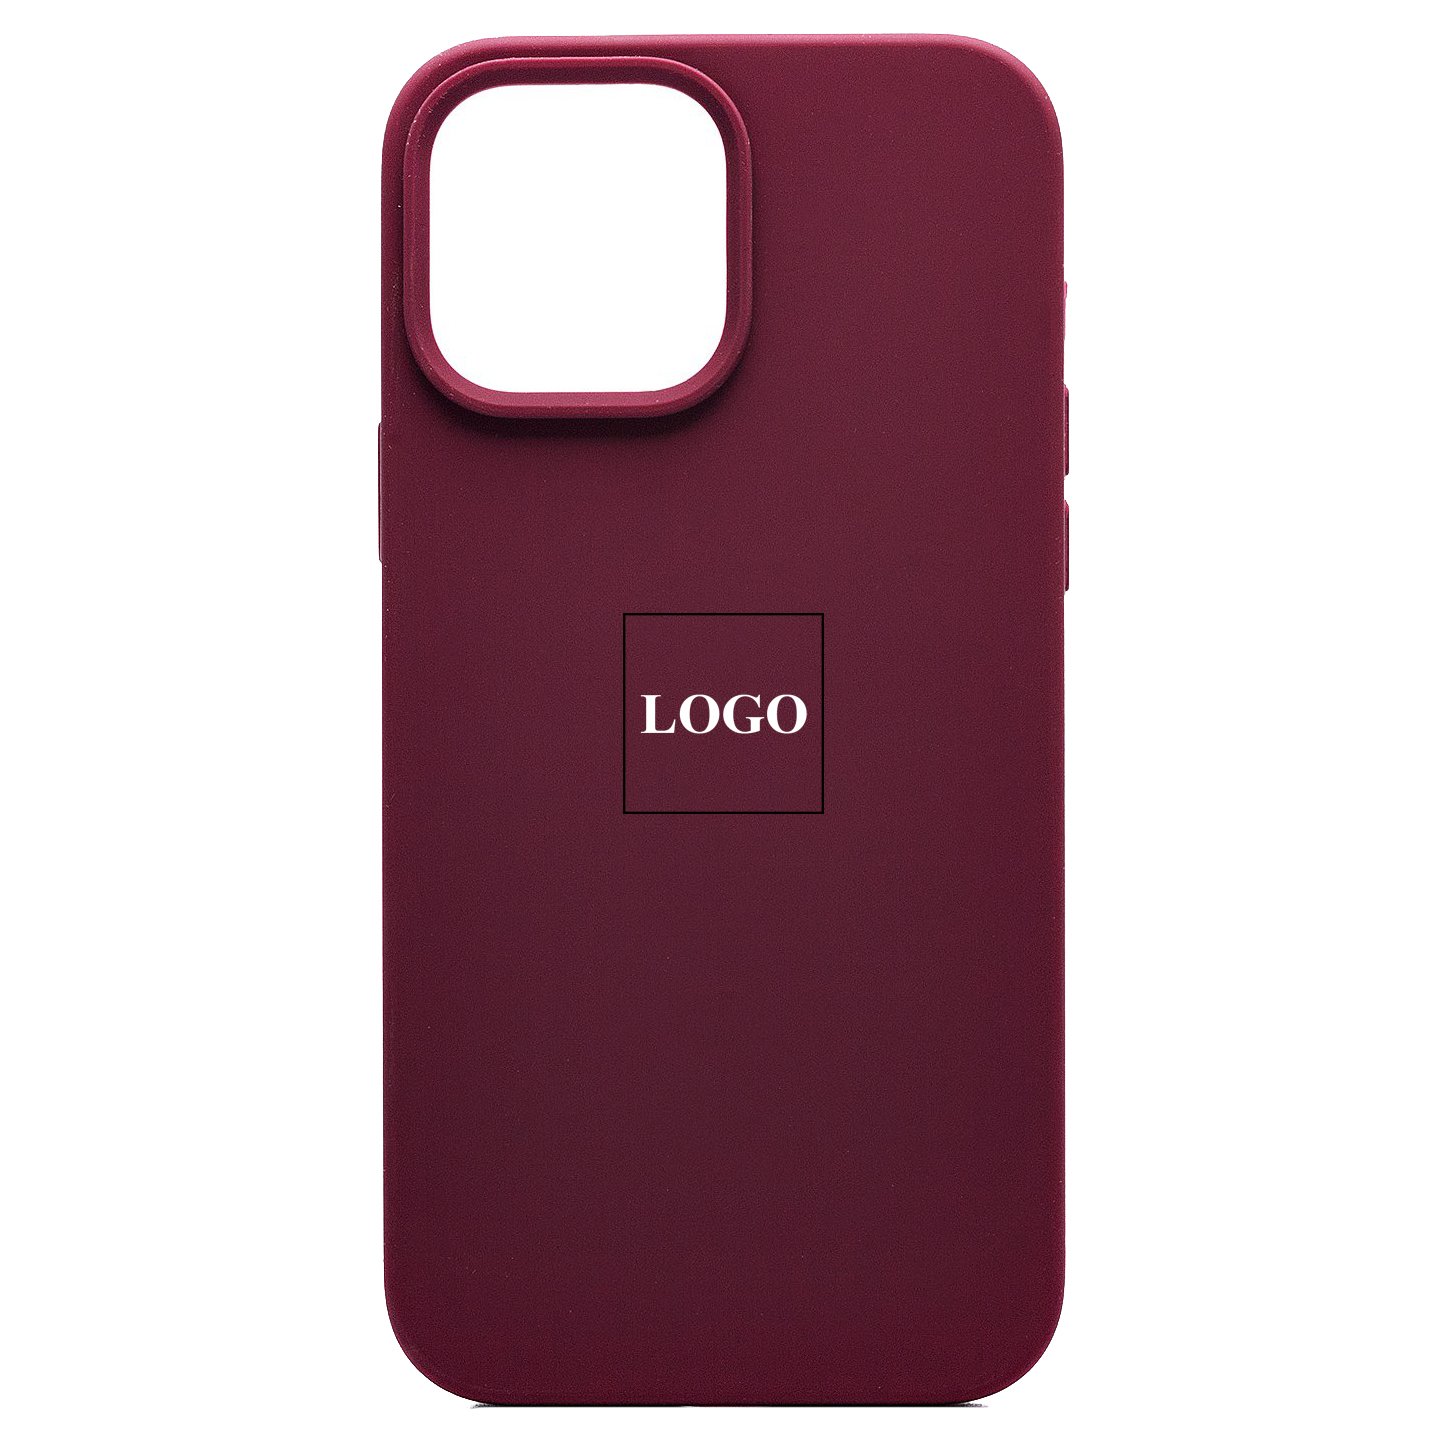 Чехол-накладка ORG для смартфона Apple iPhone 12 Pro Max, bordo (133317)